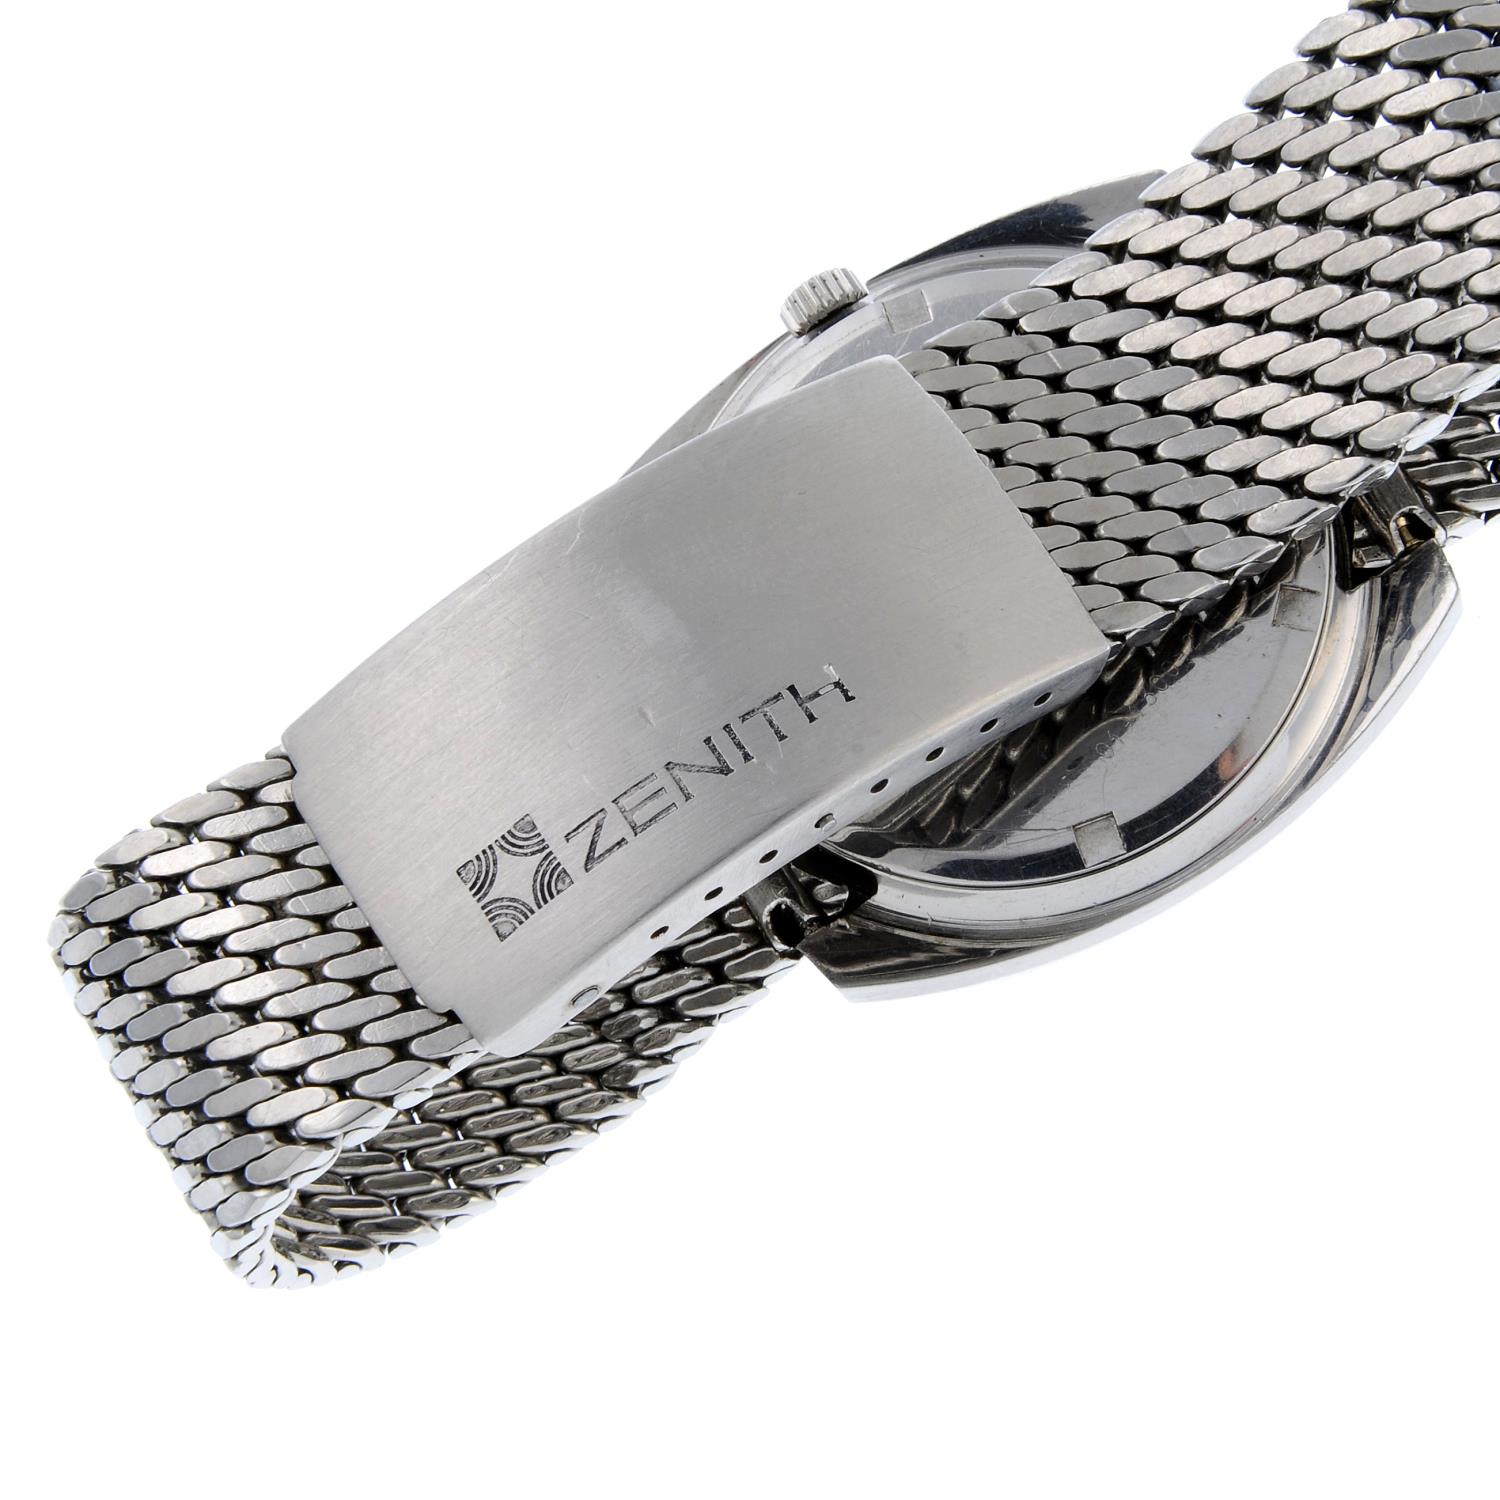 ZENITH - a gentleman's Sporto bracelet watch. - Image 2 of 4